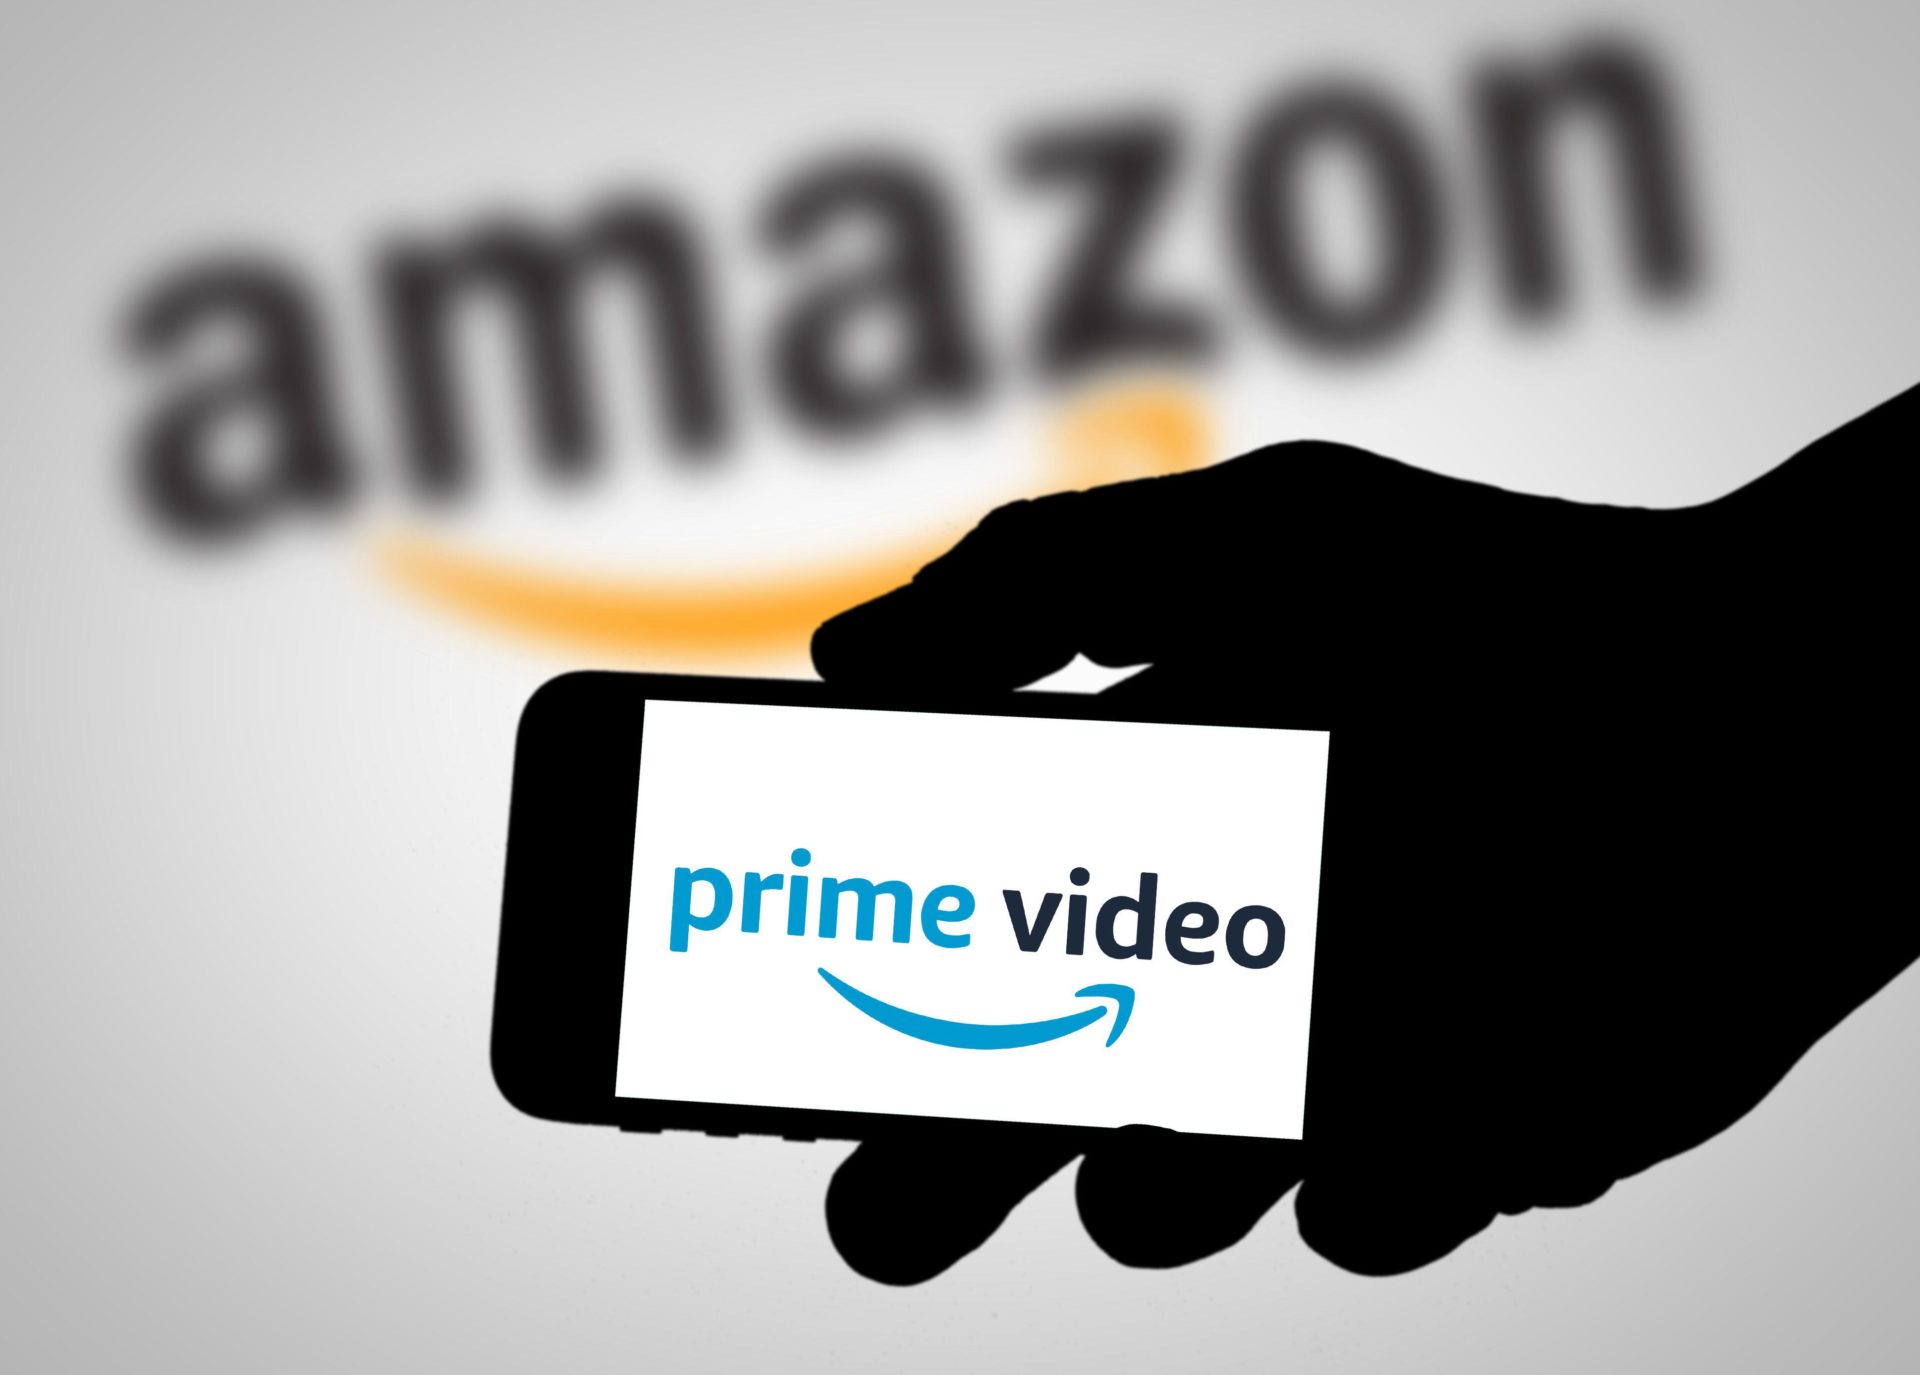 The Amazon Prime Video logo